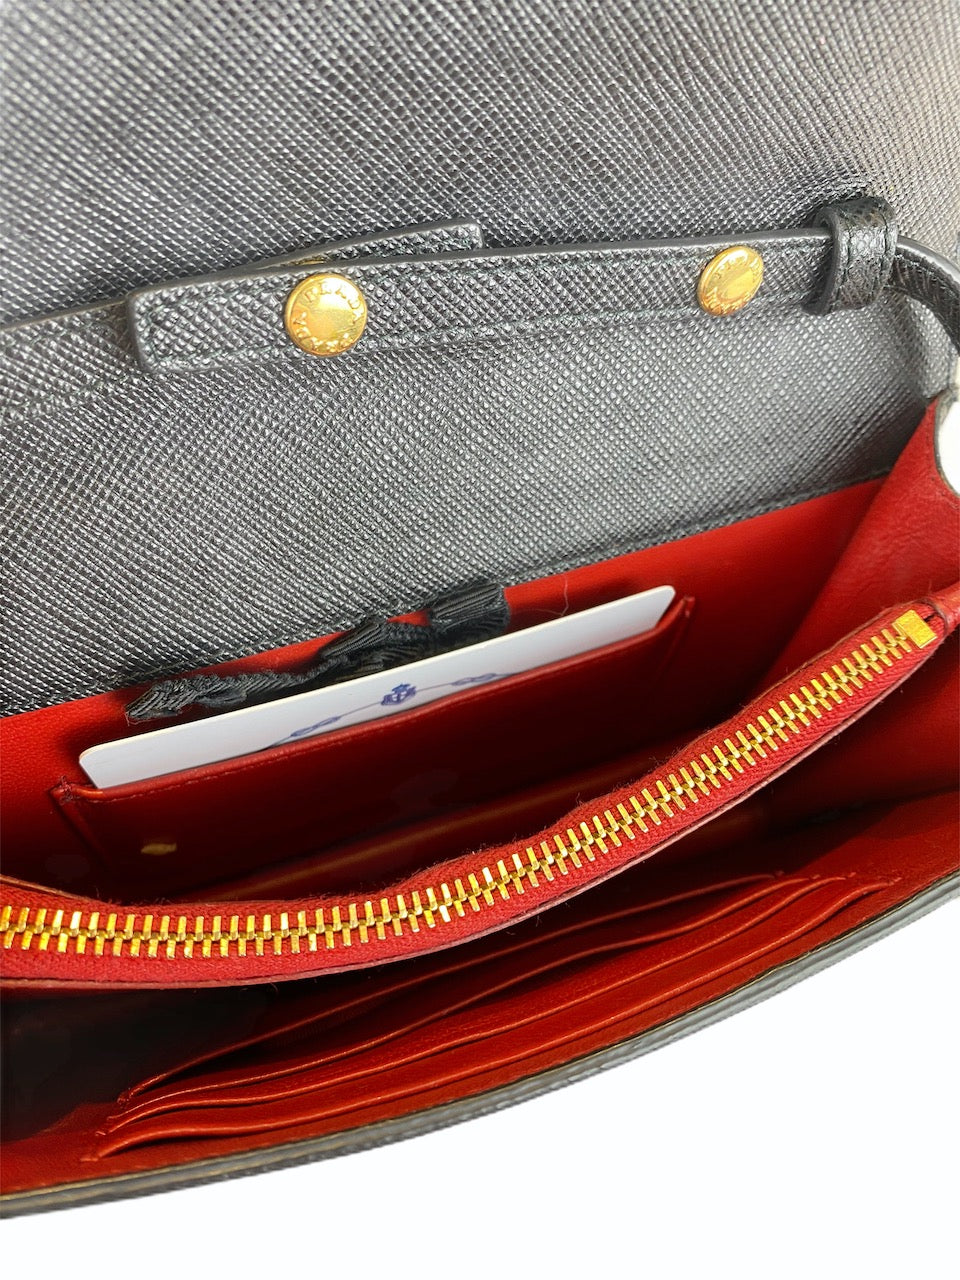 Prada Black Saffiano Leather Wallet on Chain - As Seen on Instagram 2/9/20 - Siopaella Designer Exchange